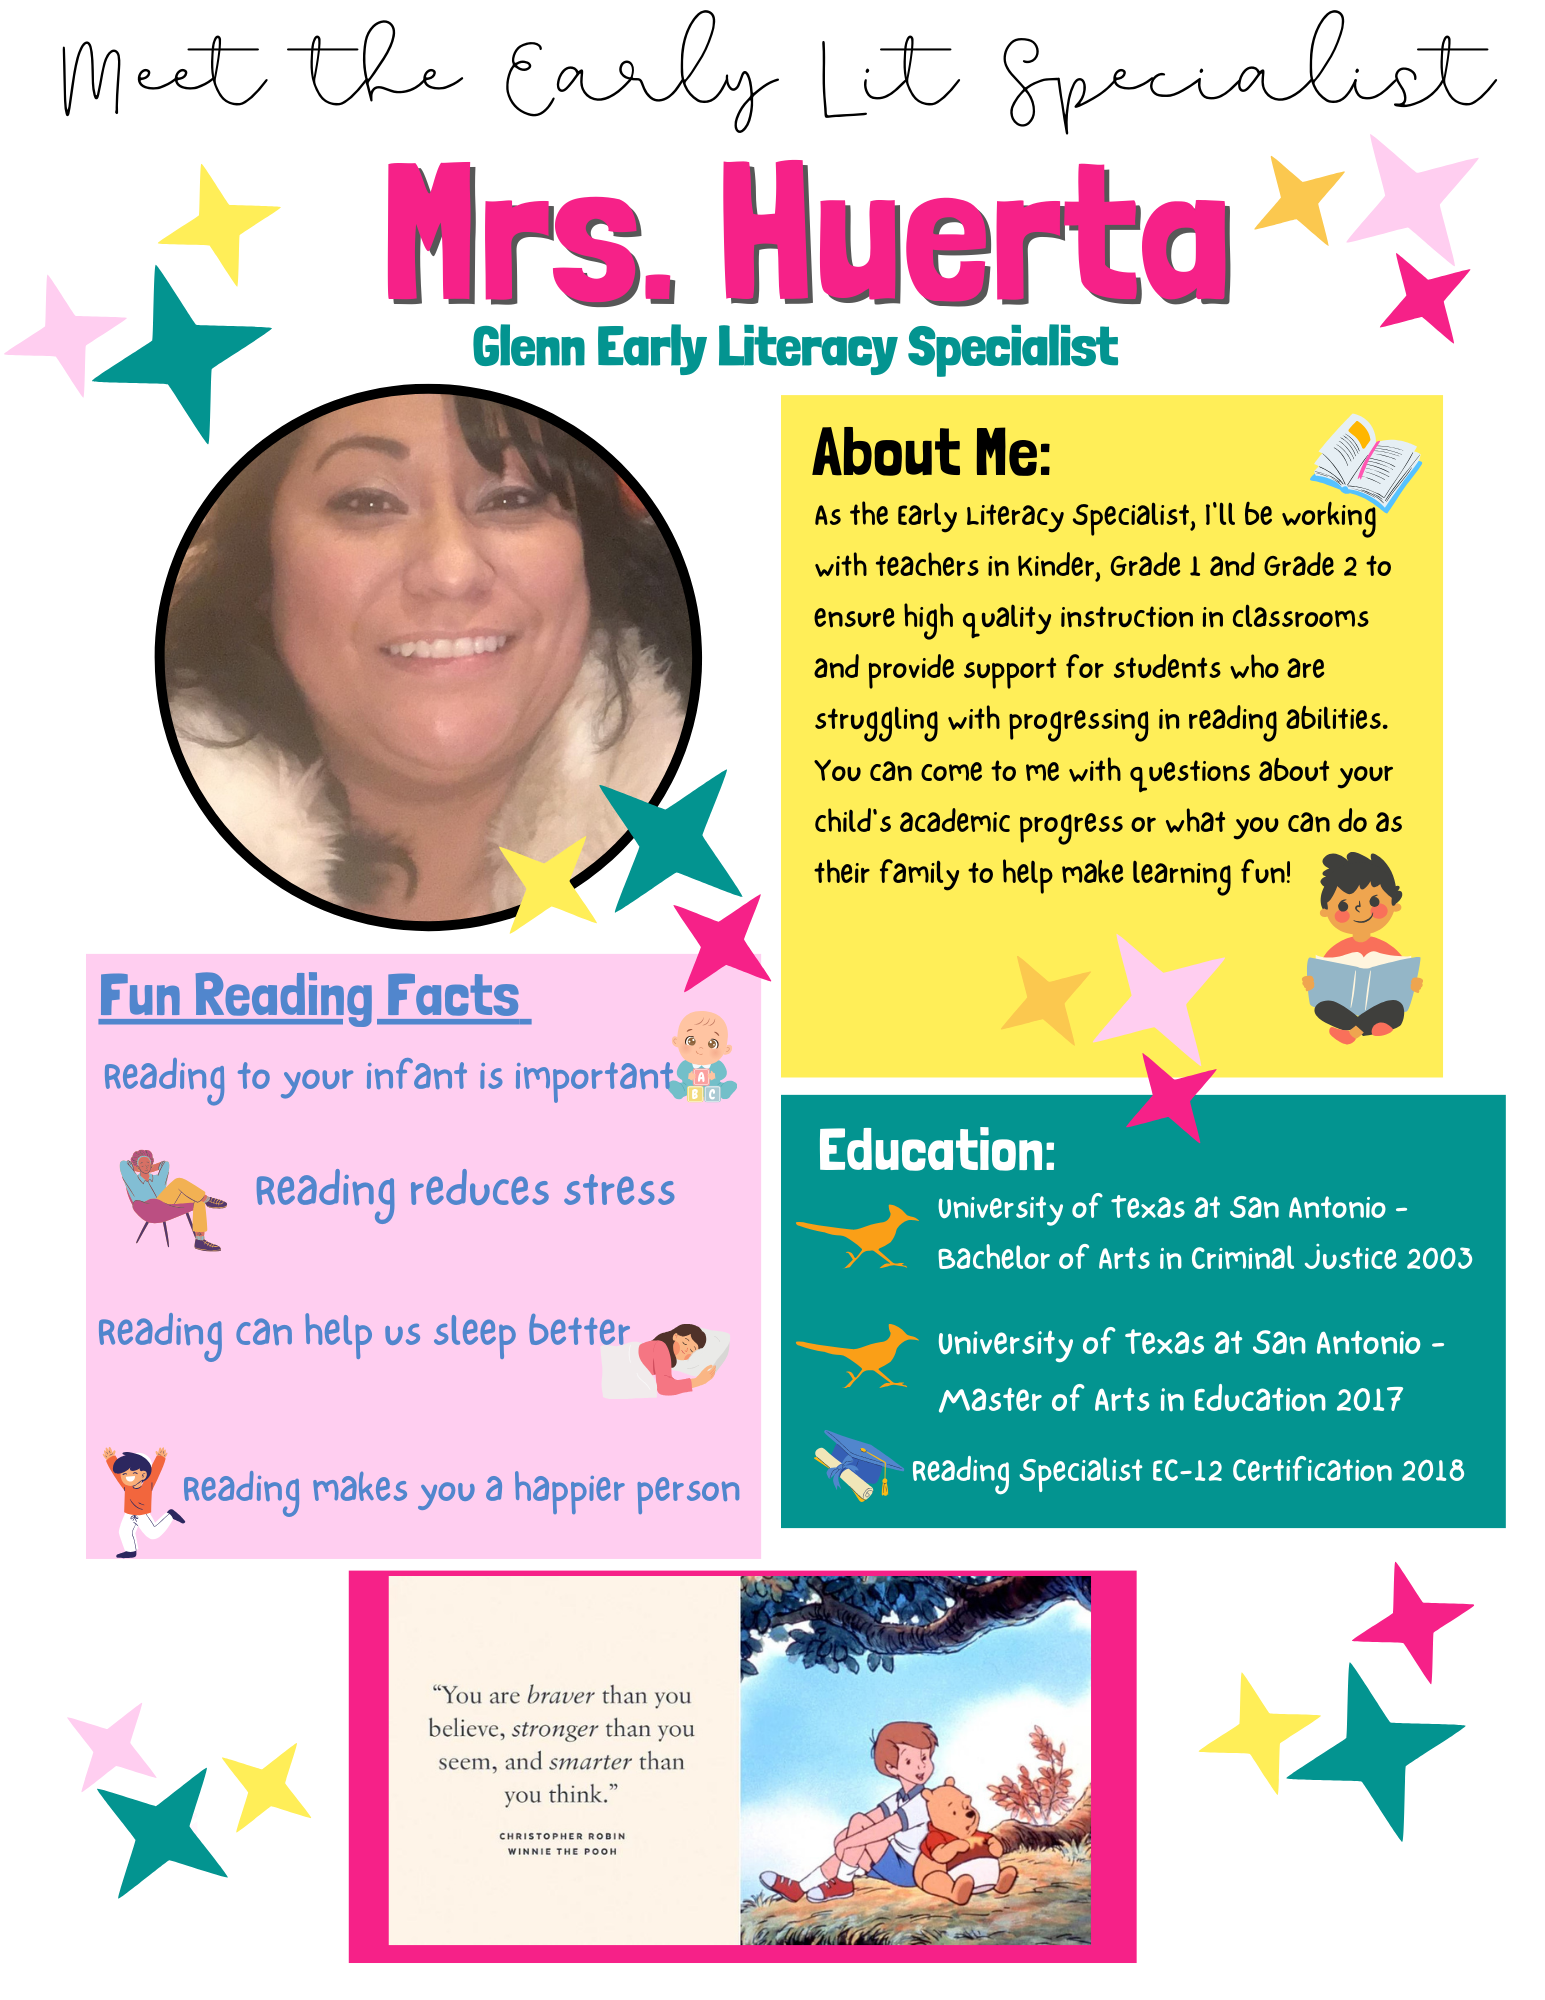 Mrs. Huerta